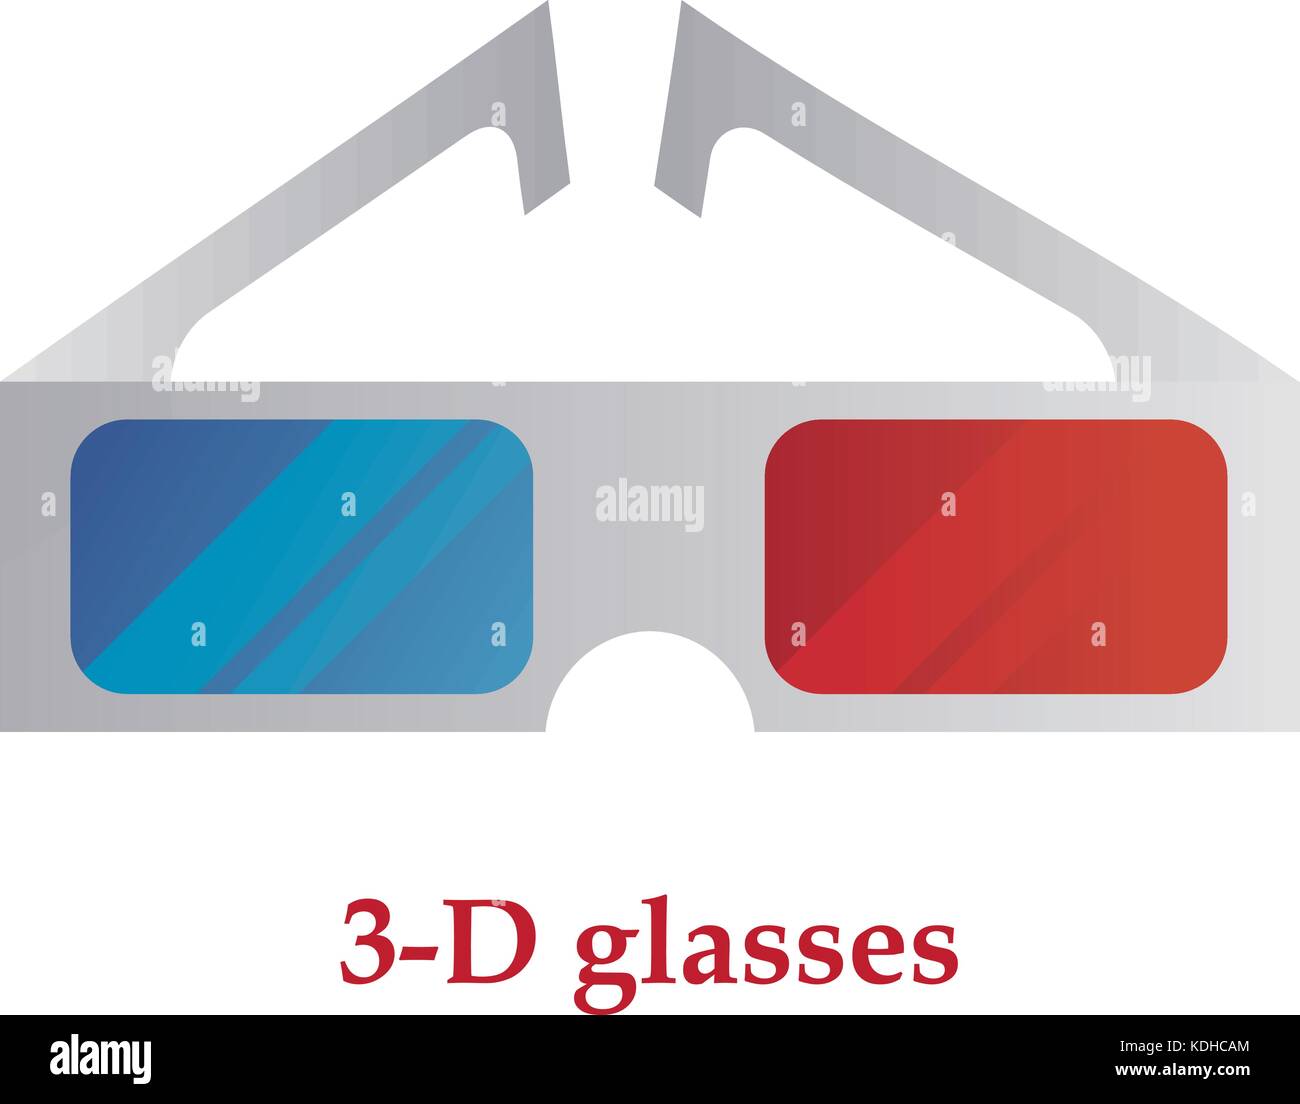 3-D glasses in vector Stock Vector